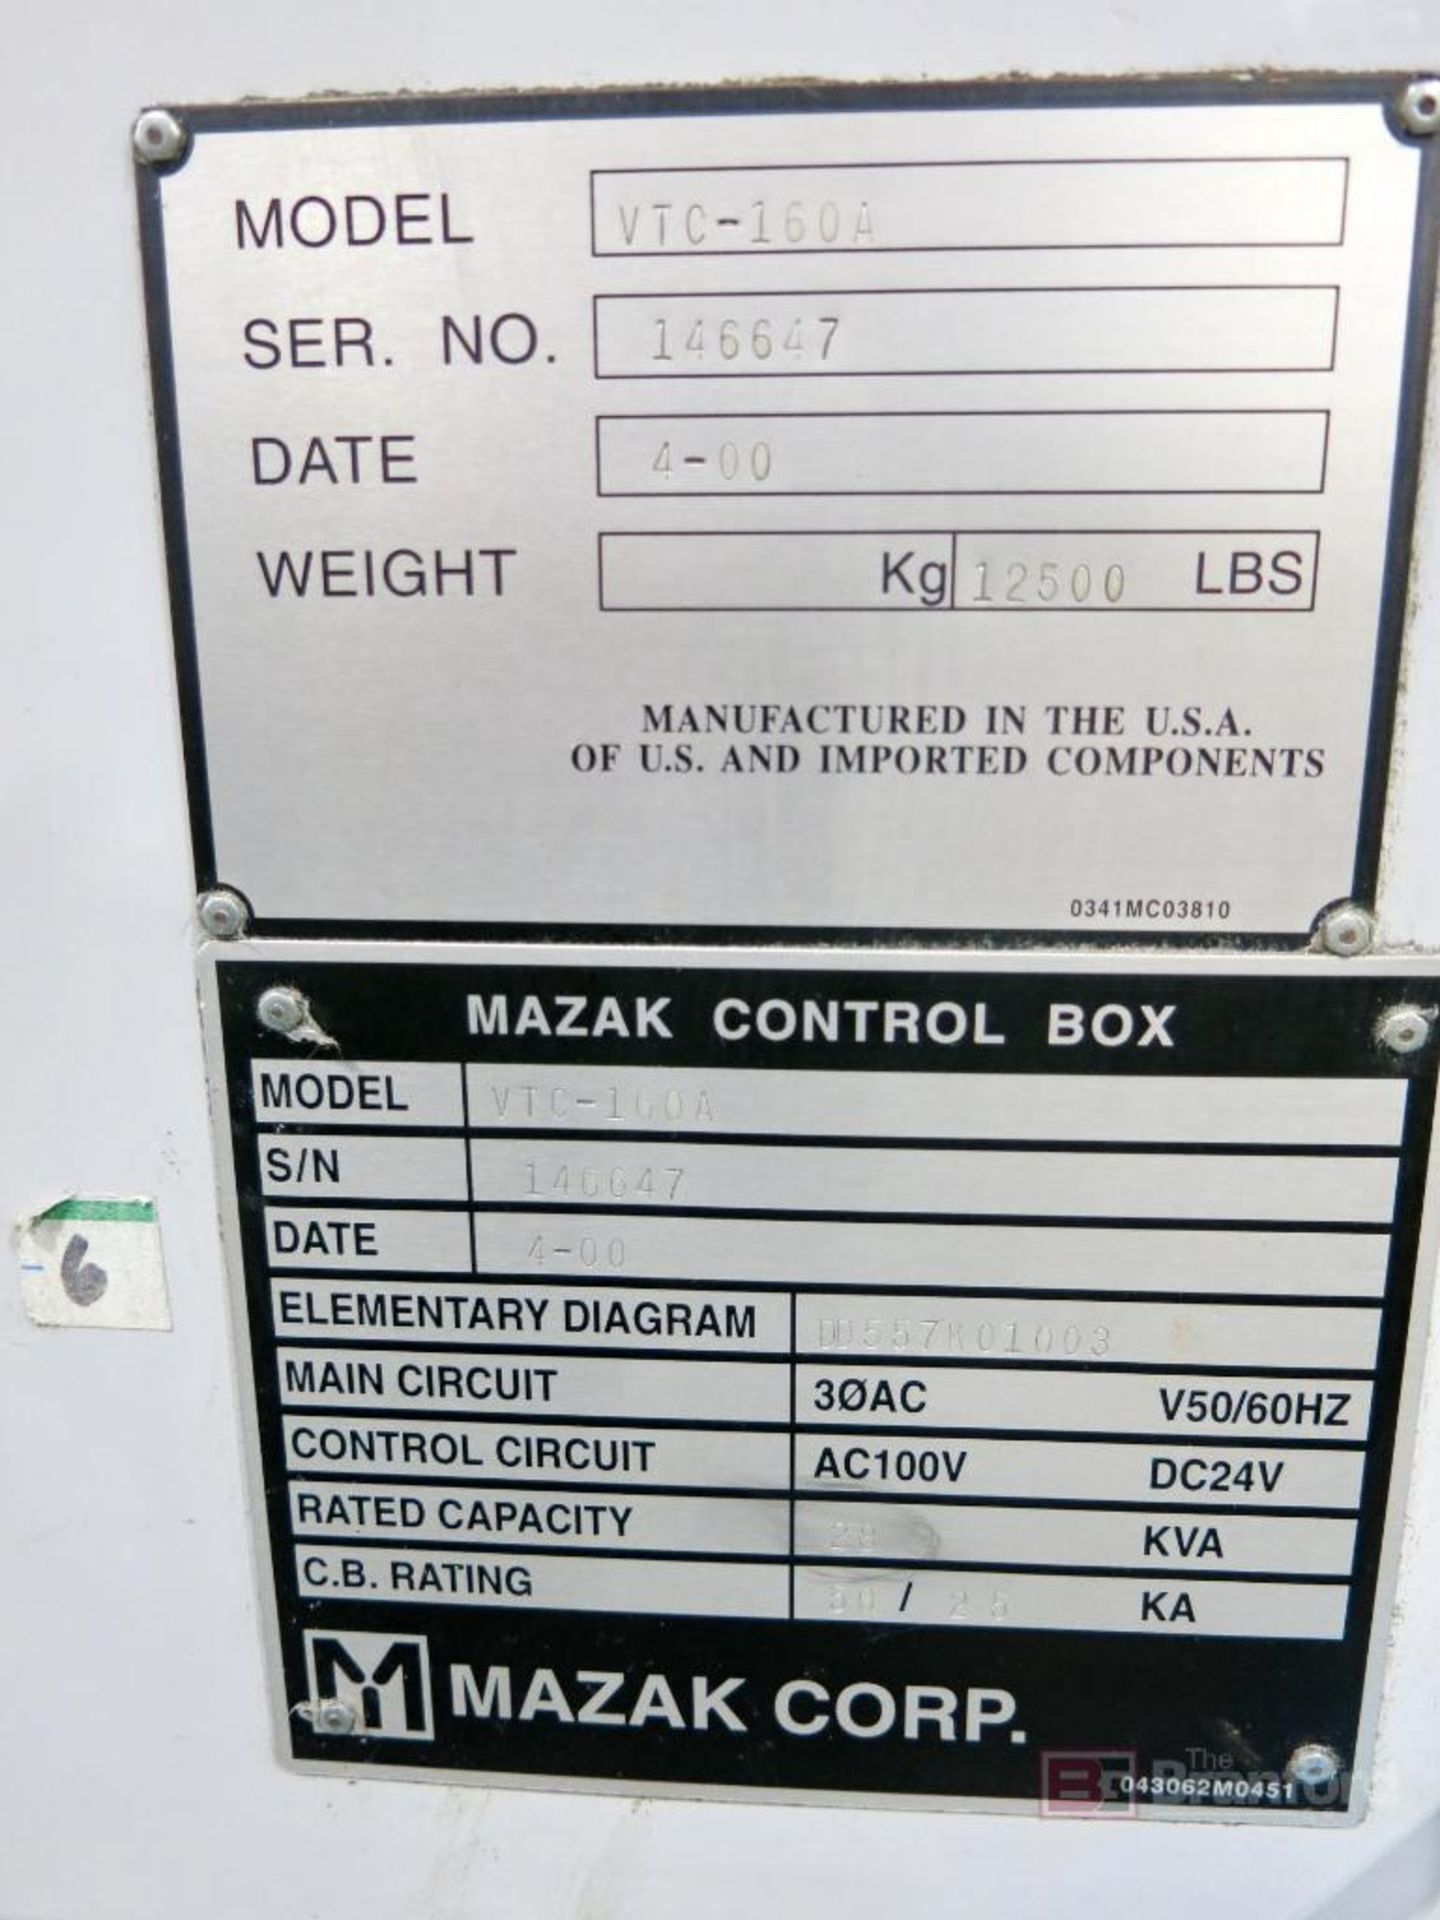 Mazak model VTC-160A cnc machining center - Image 5 of 5